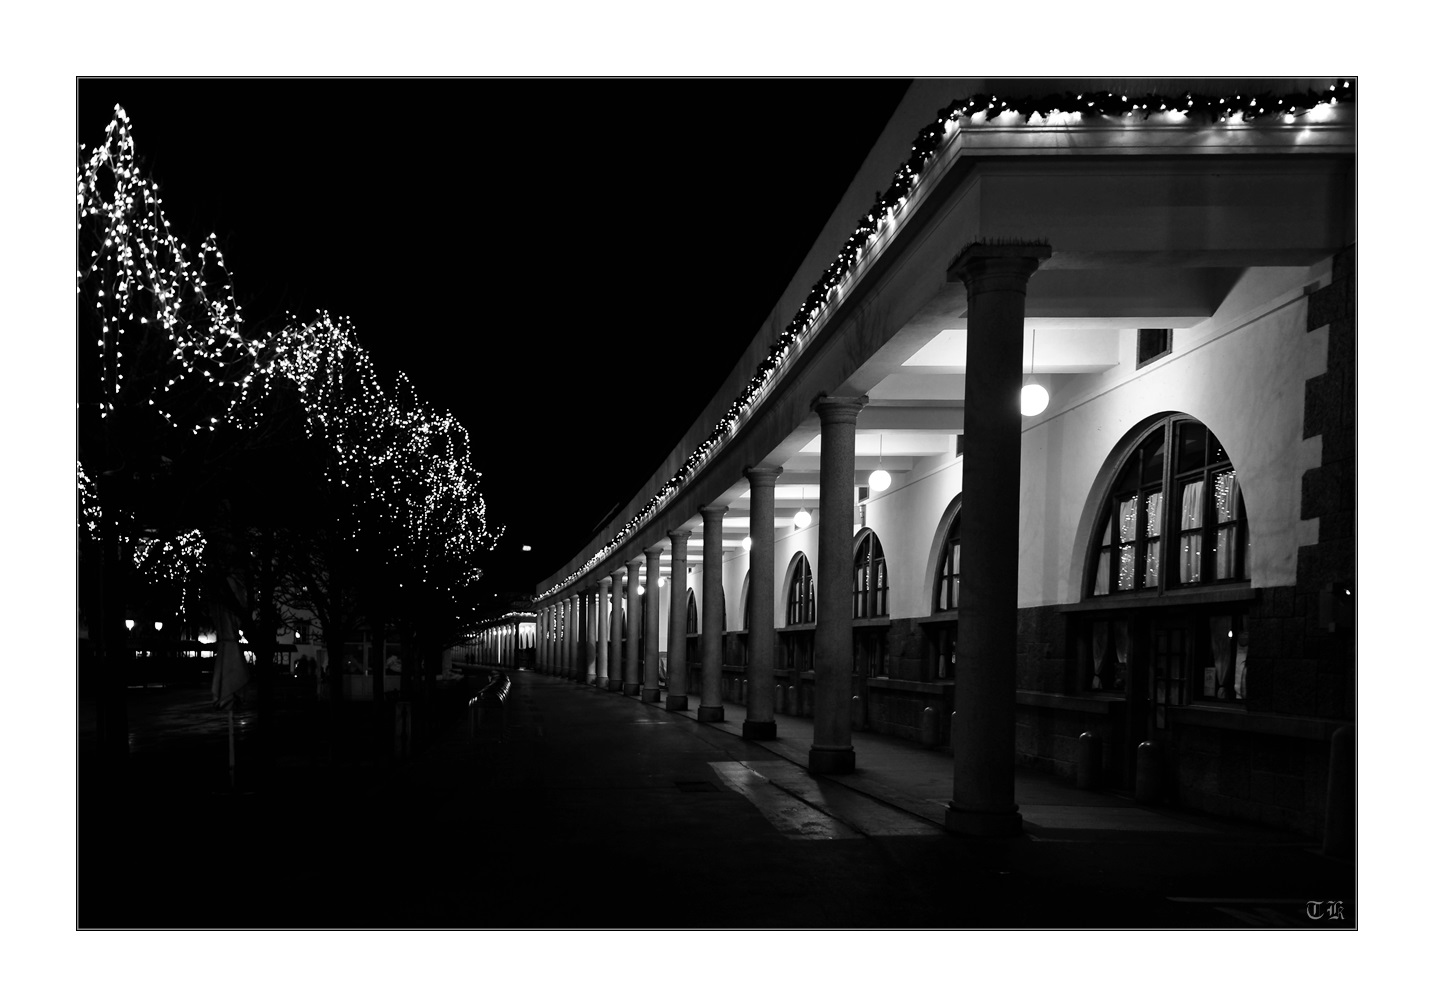 Plecnik's Colonnade in the night